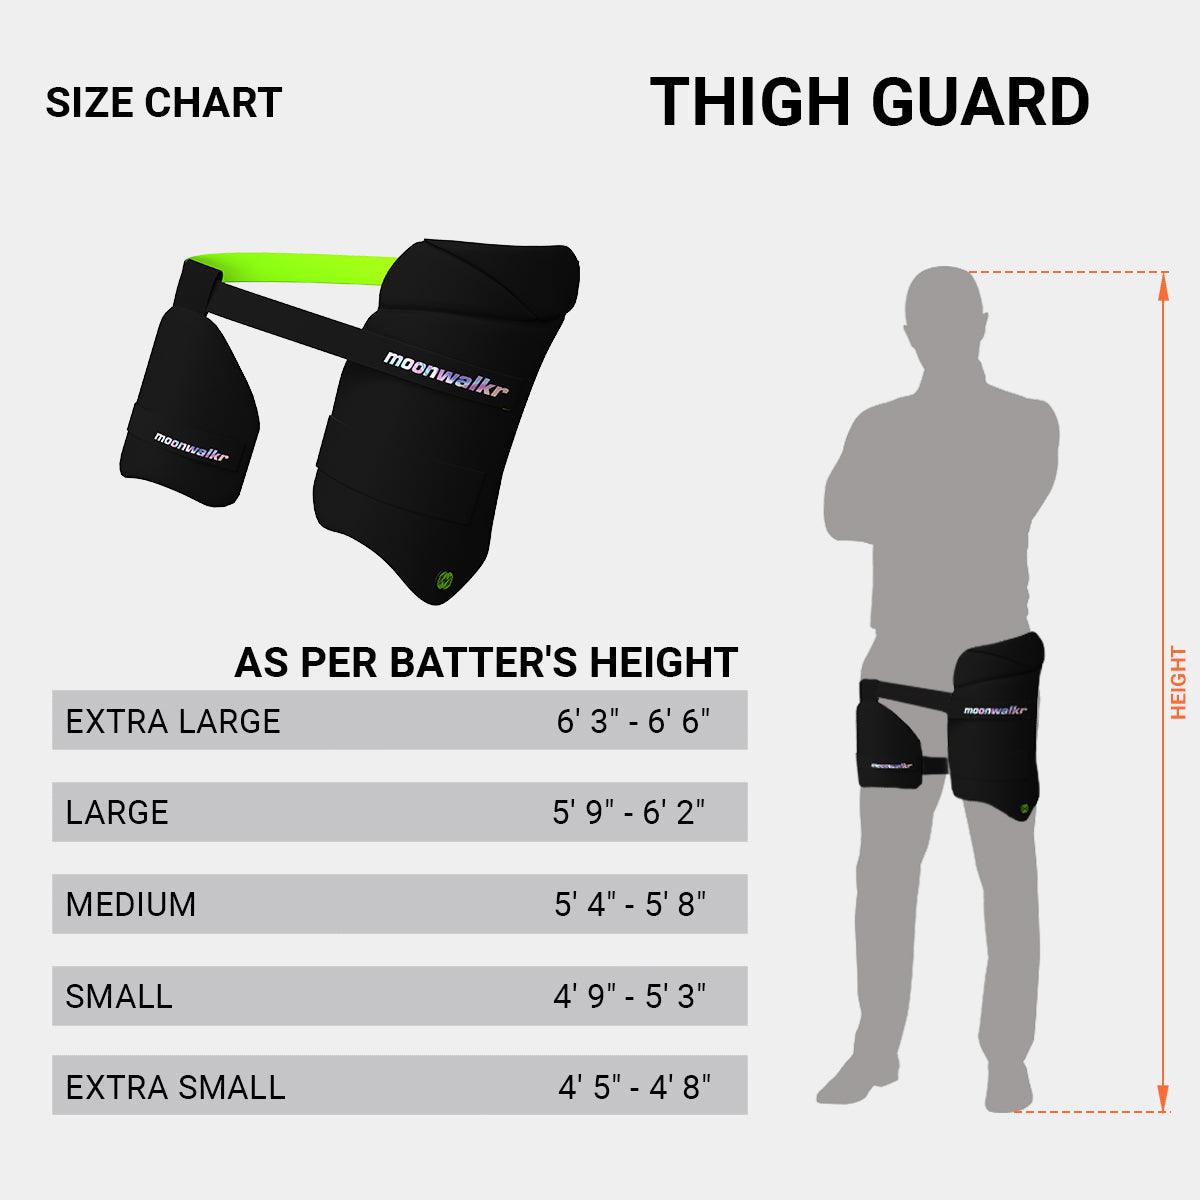 Thigh Guards 2.0 moonwalkr